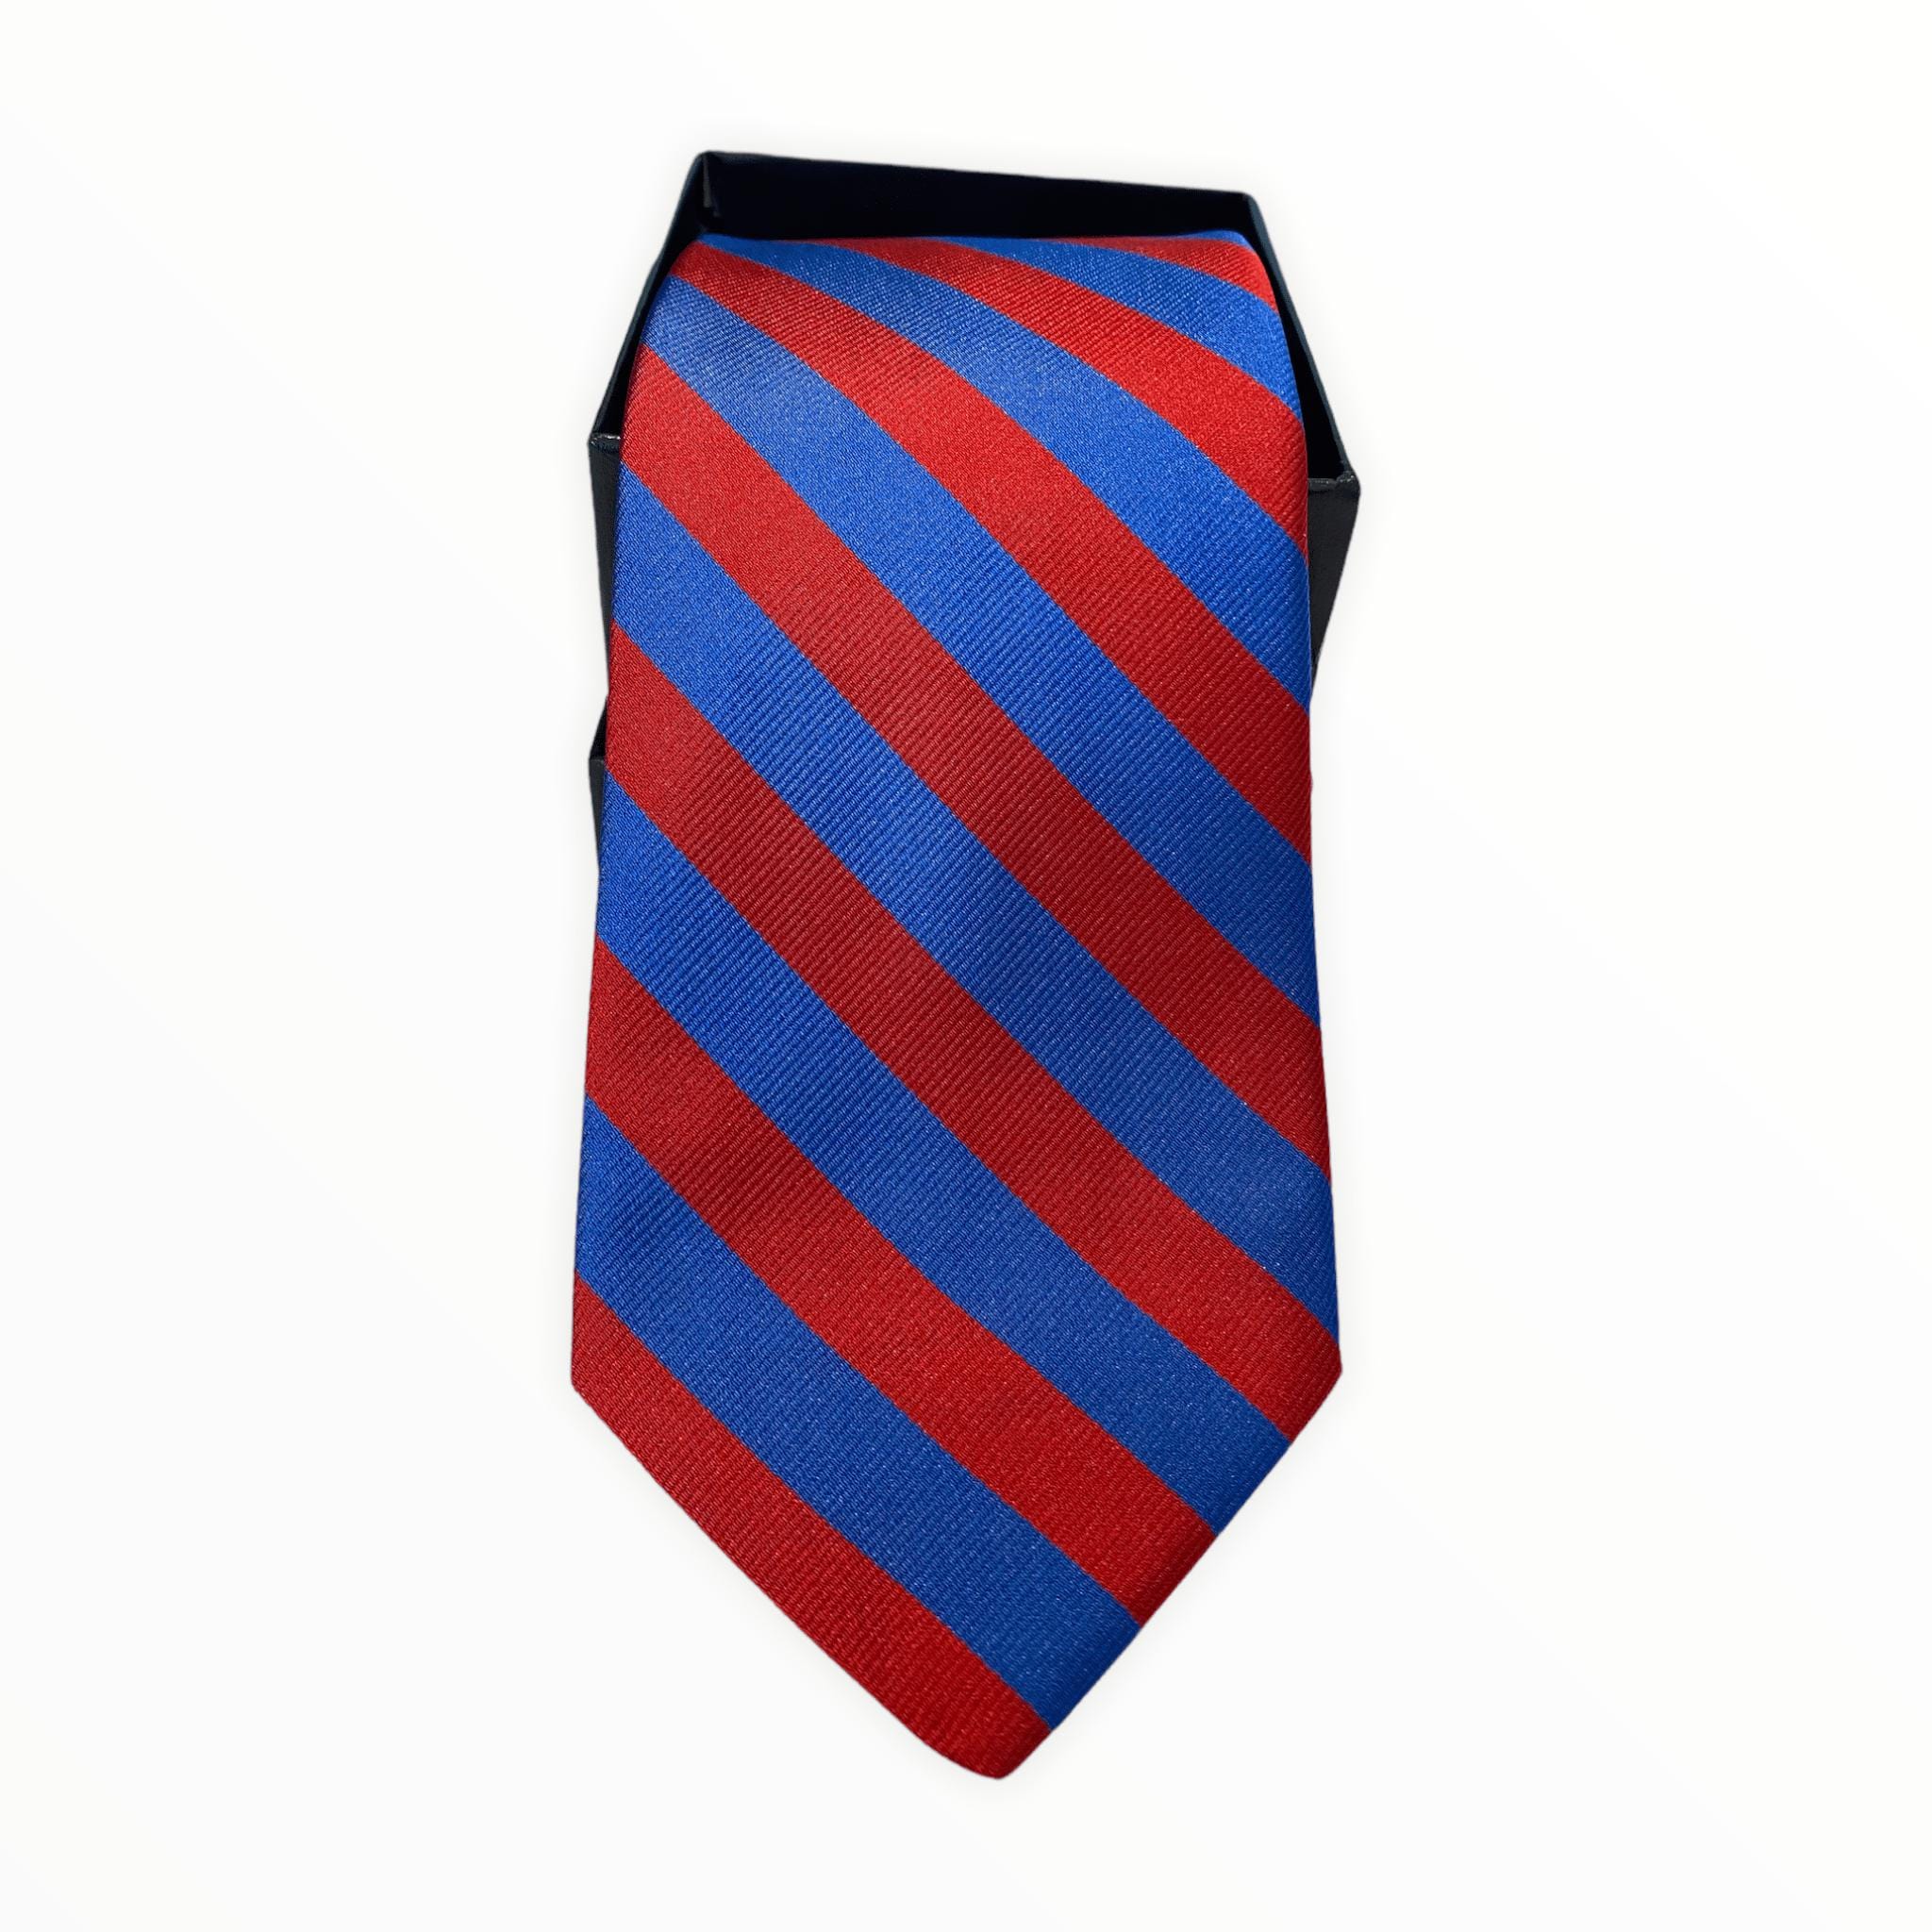 R. Hanauer Men's Necktie Royal/Scarlet Stripe Bar Tie